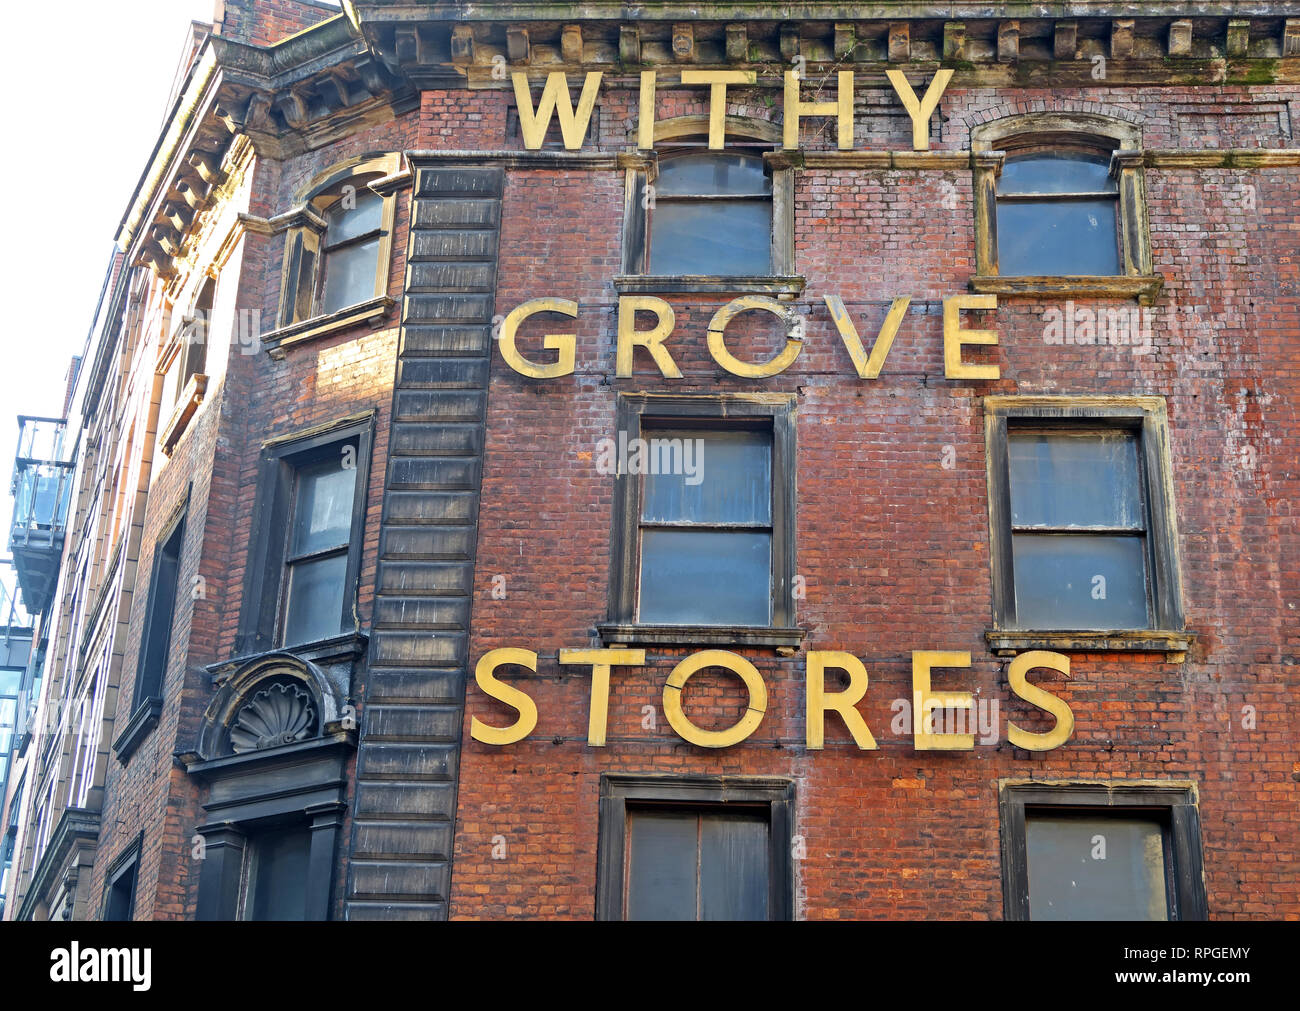 Wiy Grove Stores, Bürogeräte, Shude Hill, Manchester City Centre, Lancashire, Nordwestengland, UK, M4 2BJ Stockfoto